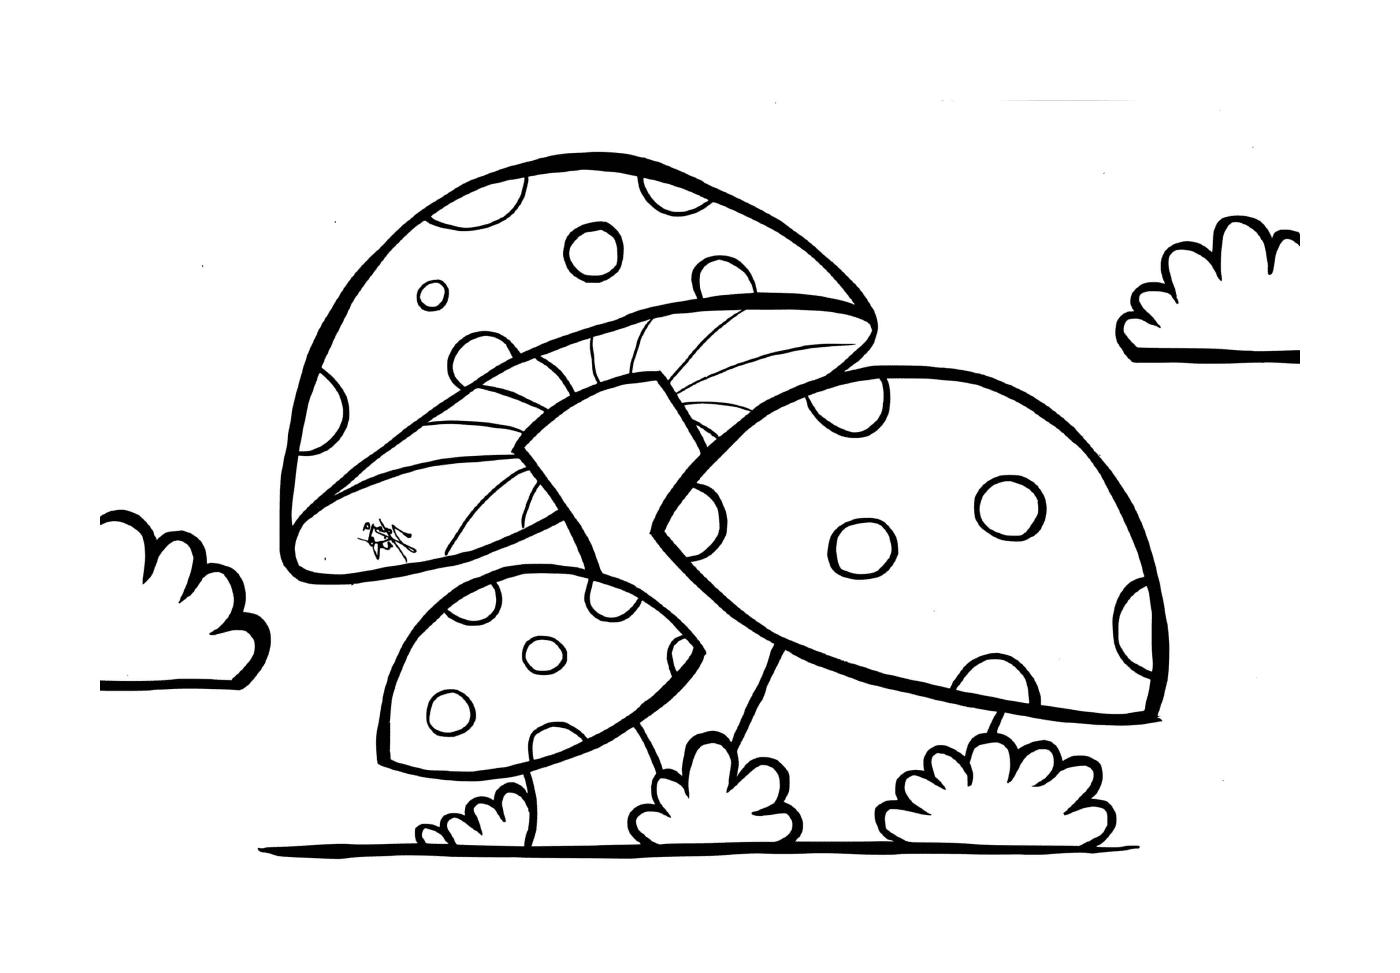  Mushrooms with pea motifs 